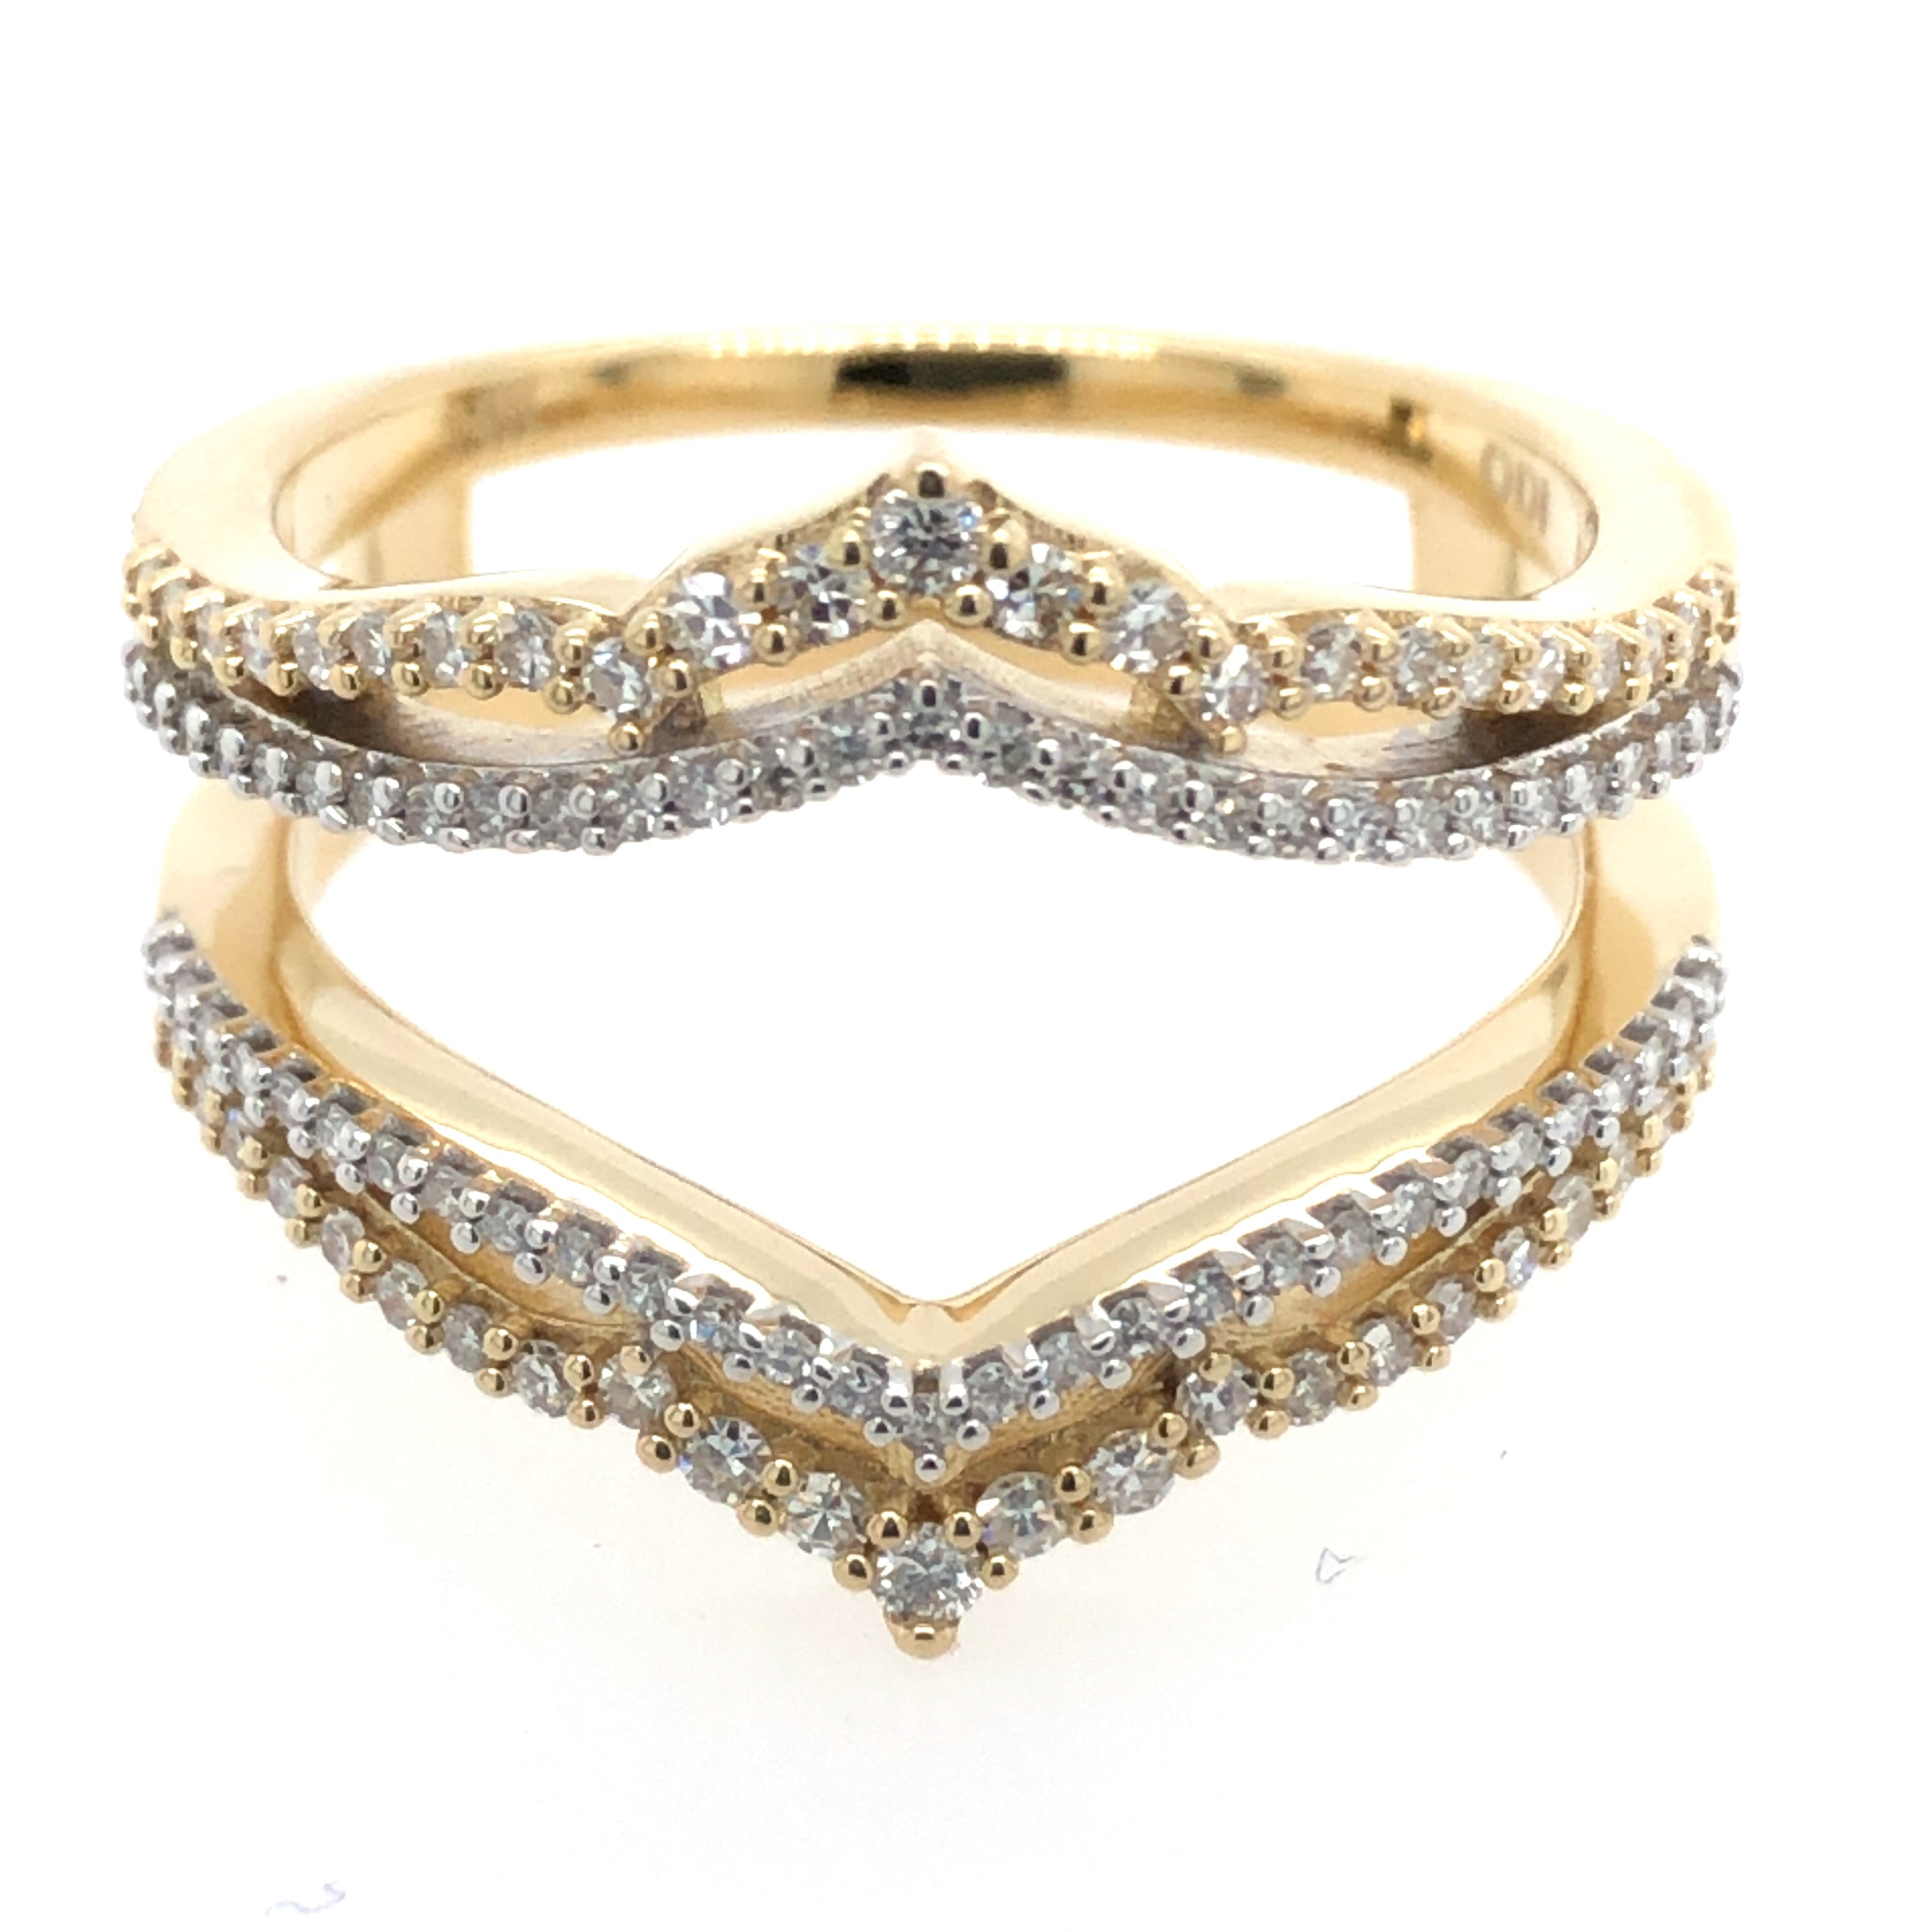 Ring Gaurd Wedding Band - Diamond Wedding Bands for Mountings